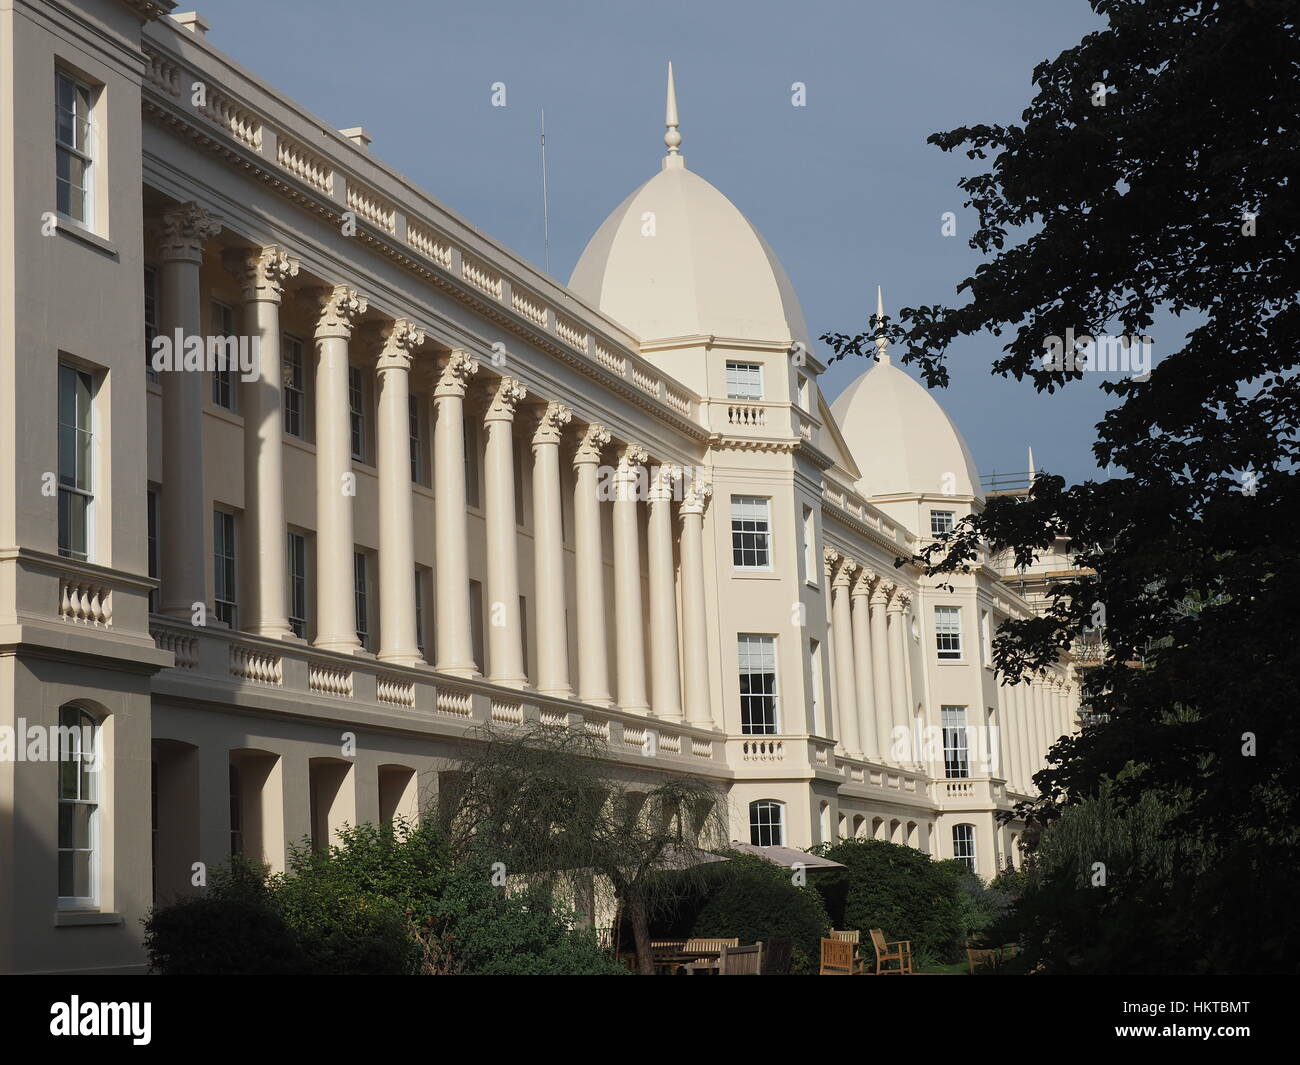 University of London Business School, in historic mansion overlooking Regent's Park Stock Photo